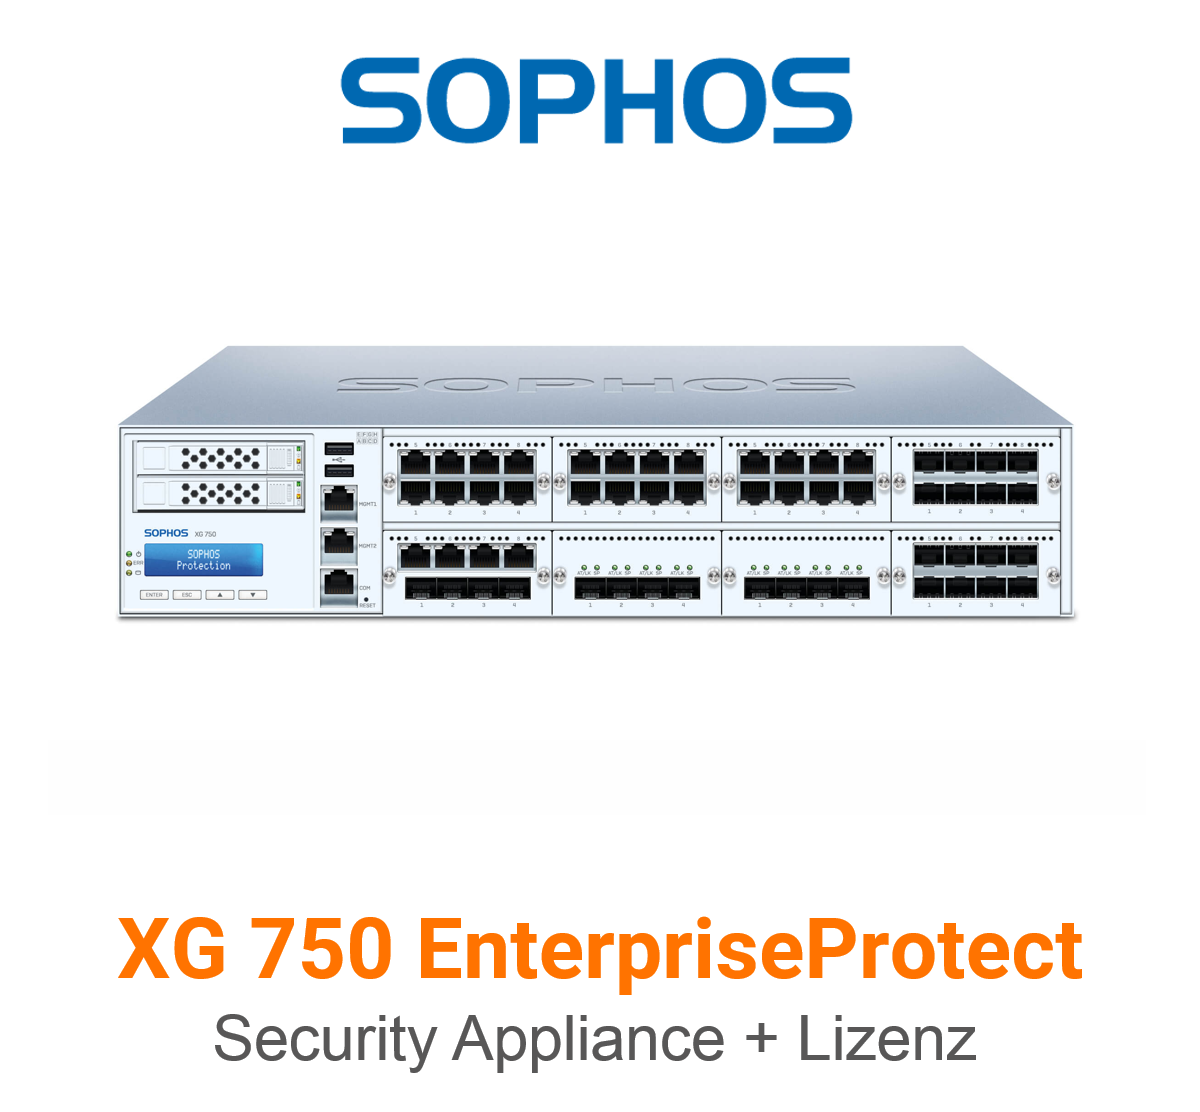 Sophos XG 750 EnterpriseProtect Bundle (Hardware + Lizenz)